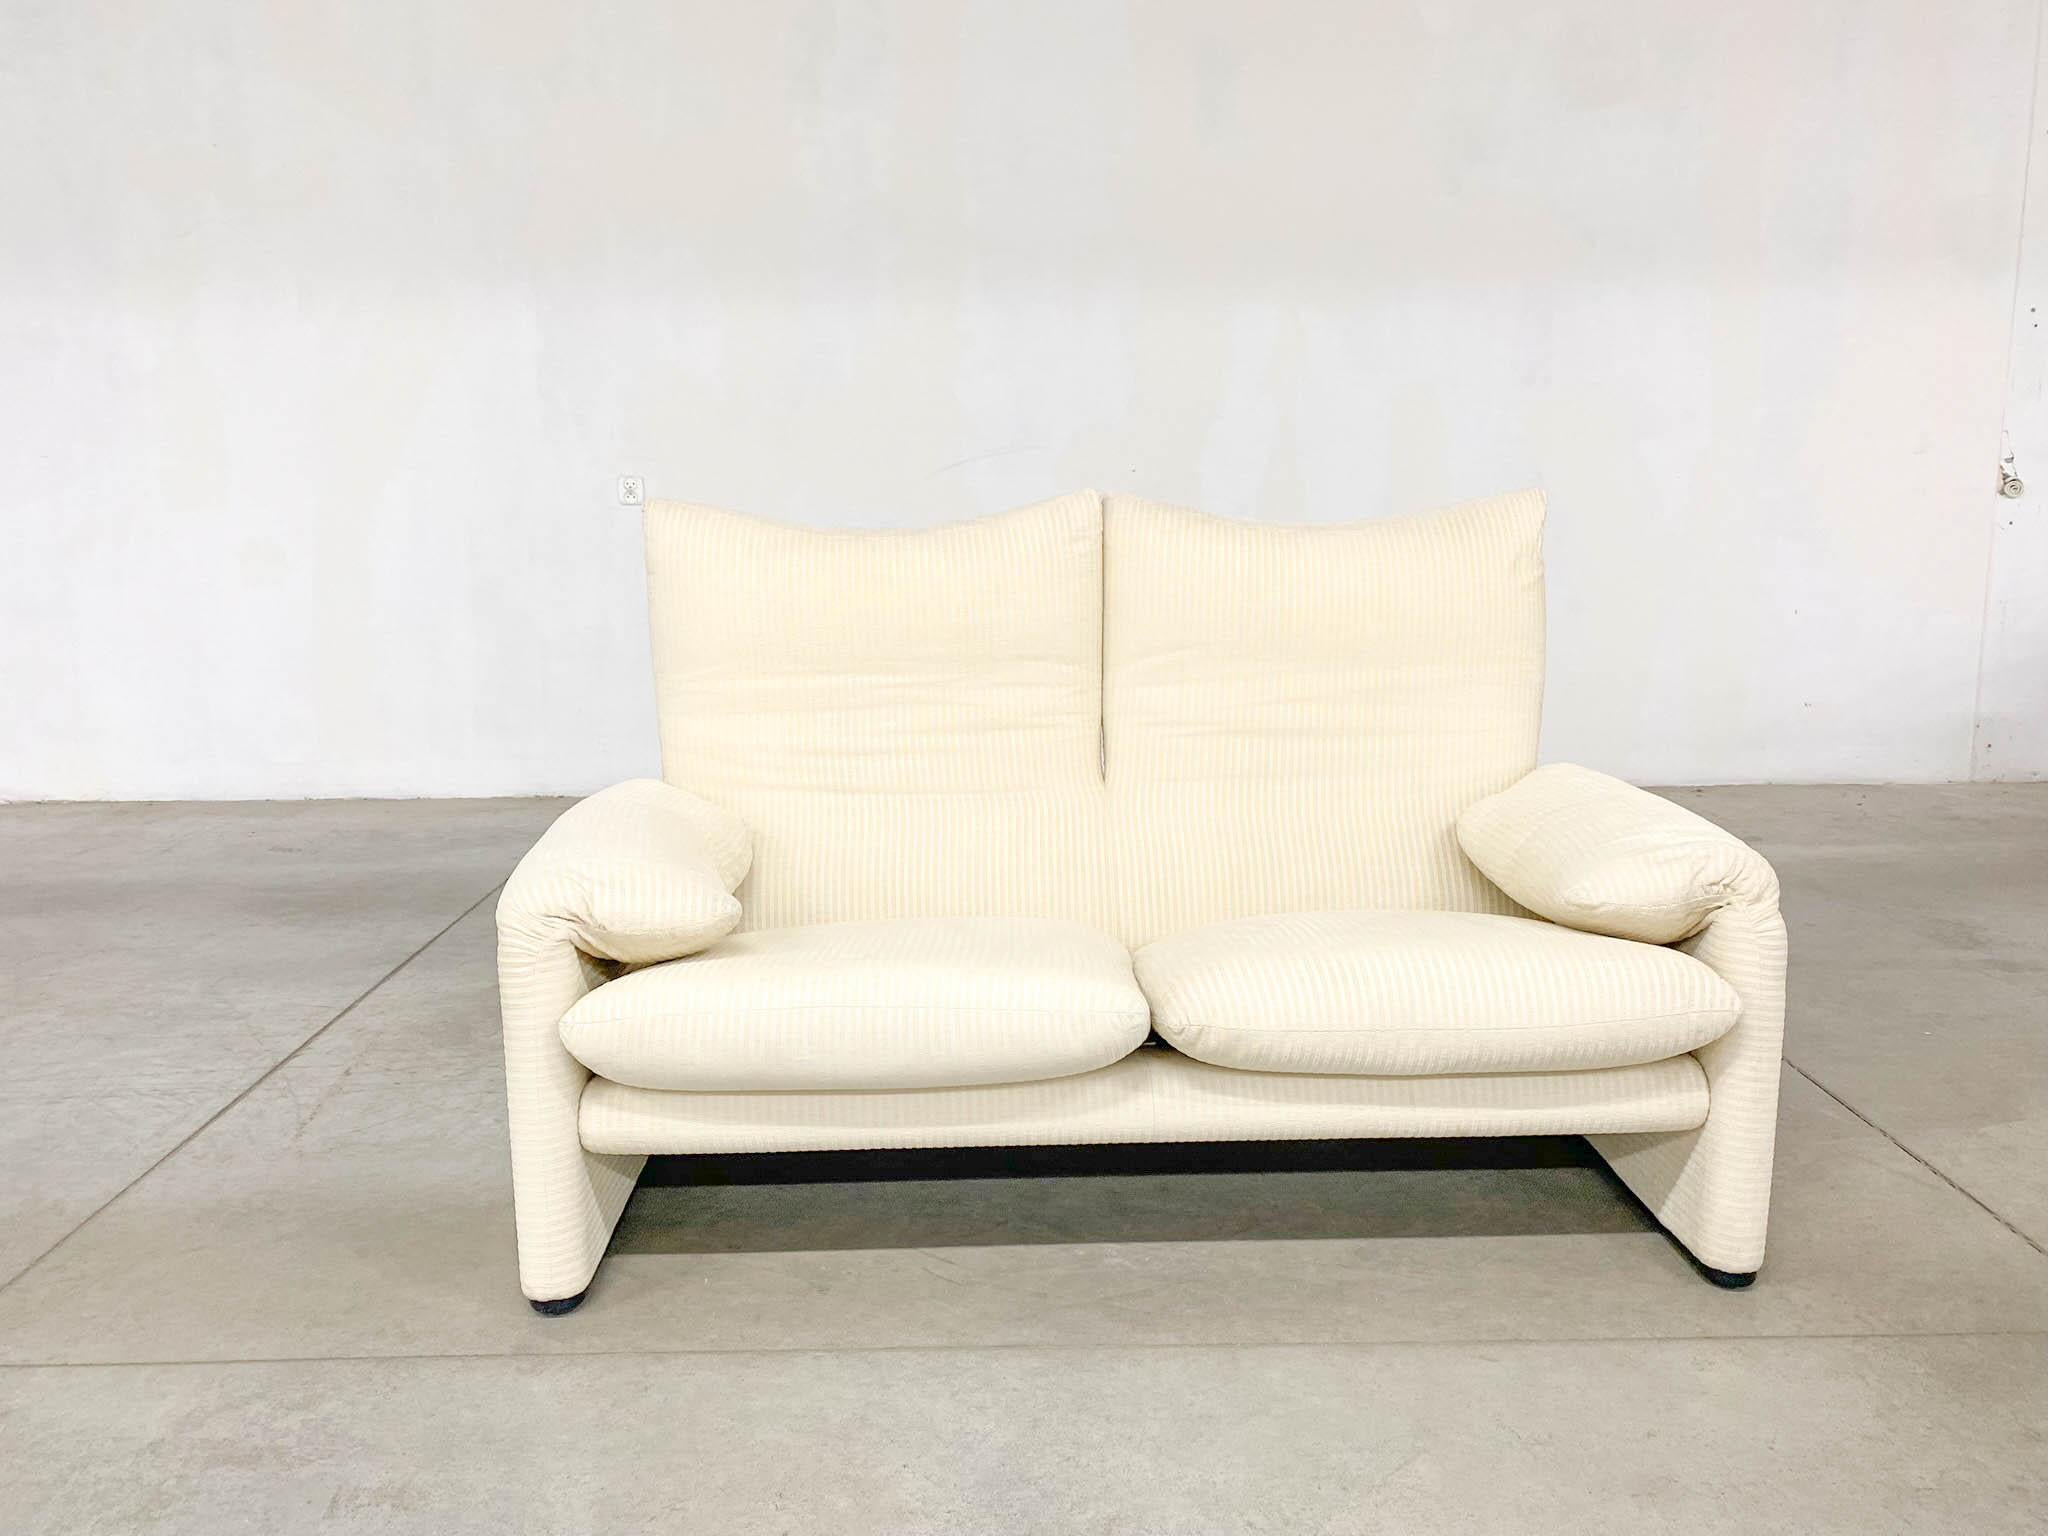 Fabric Maralunga 2-Seater Sofa by Vico Magistretti for Cassina, 1990s For Sale